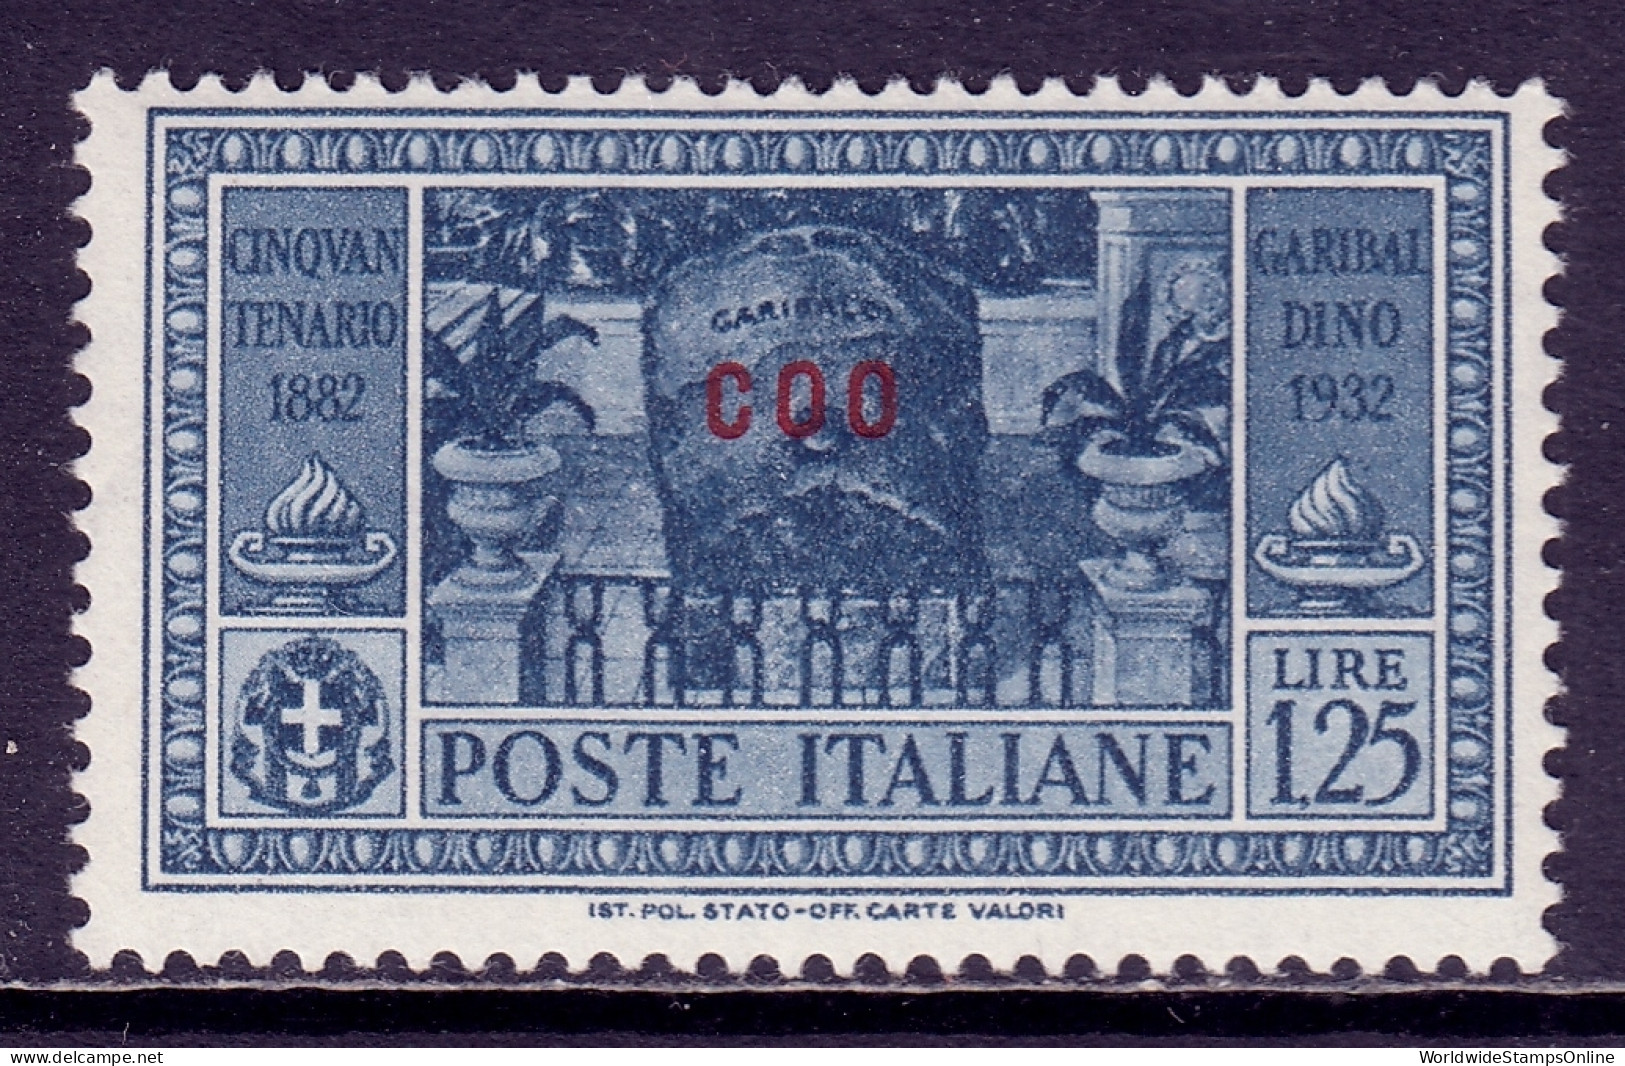 Italy (Coo) - Scott #23 - MH - SCV $18 - Egée (Coo)